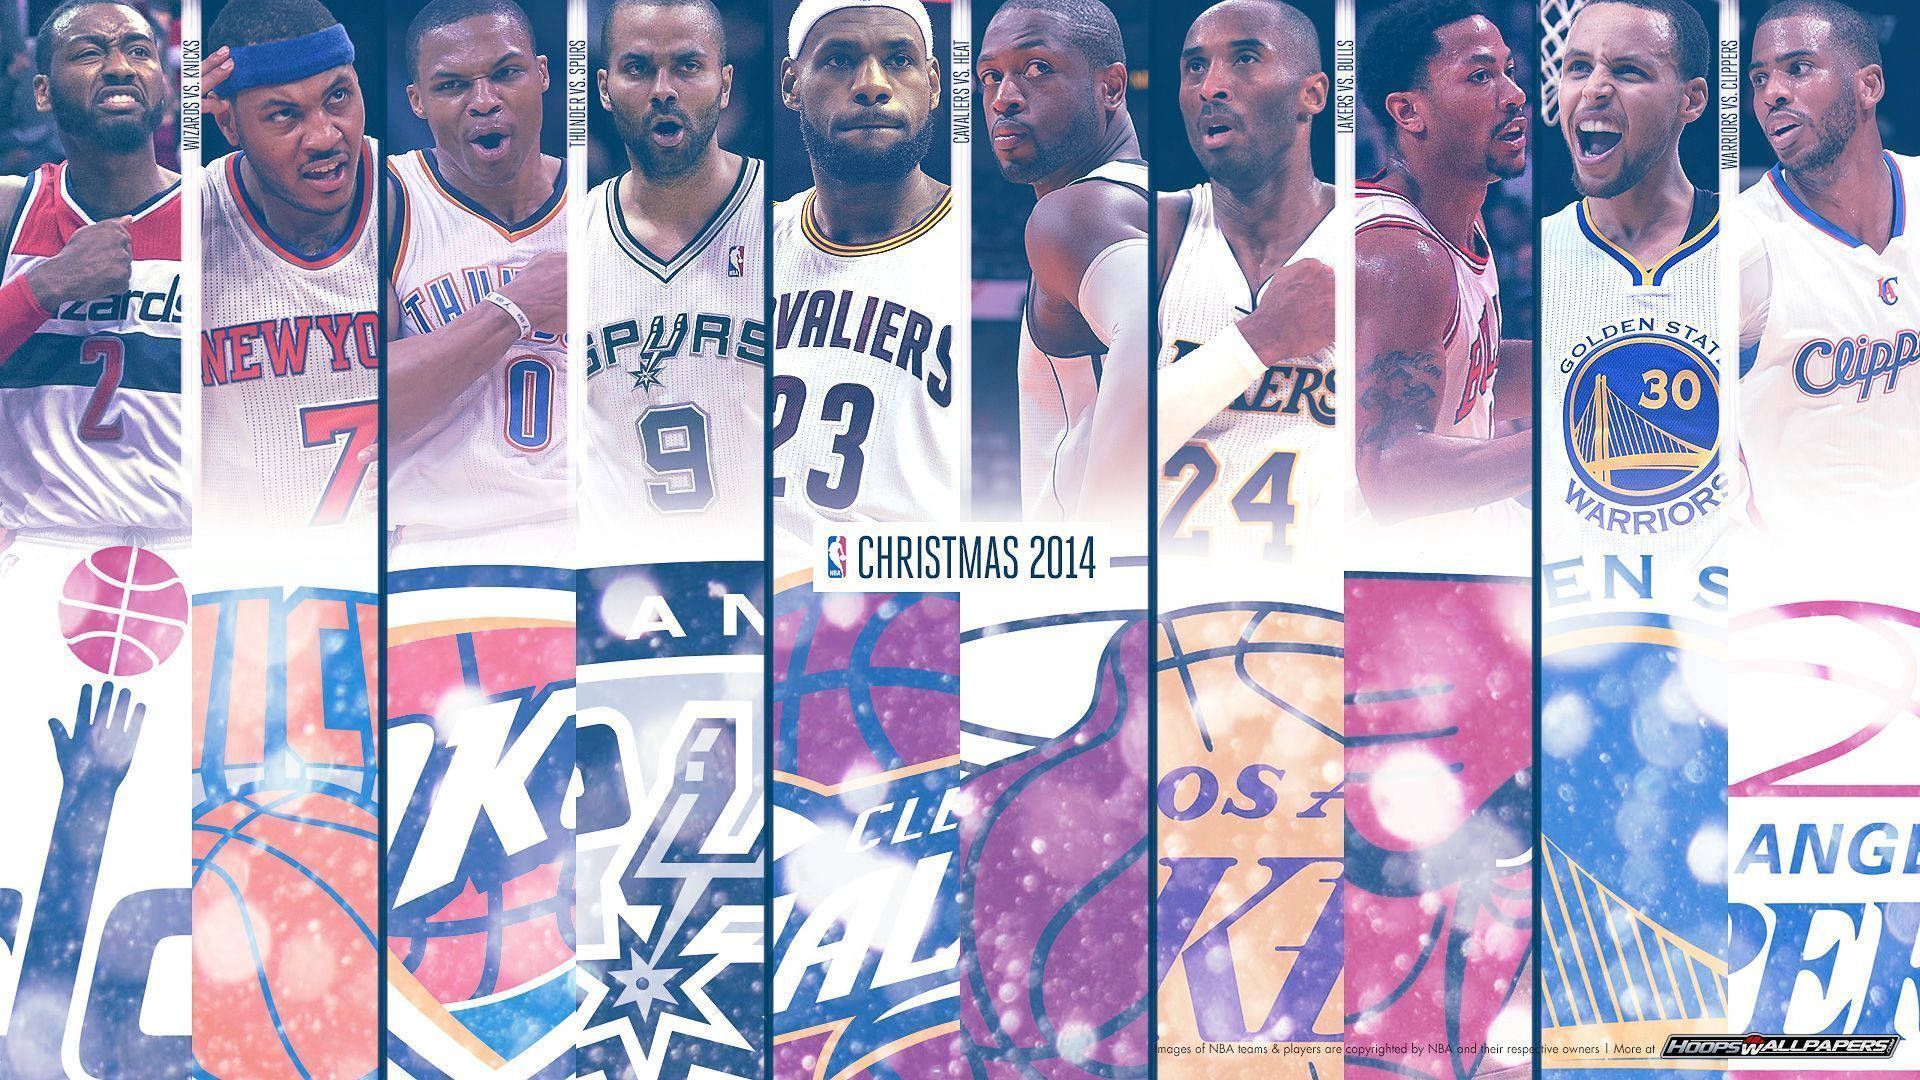 Christmas Day 2014 NBA Wallpaper featuring all 30 teams. - NBA